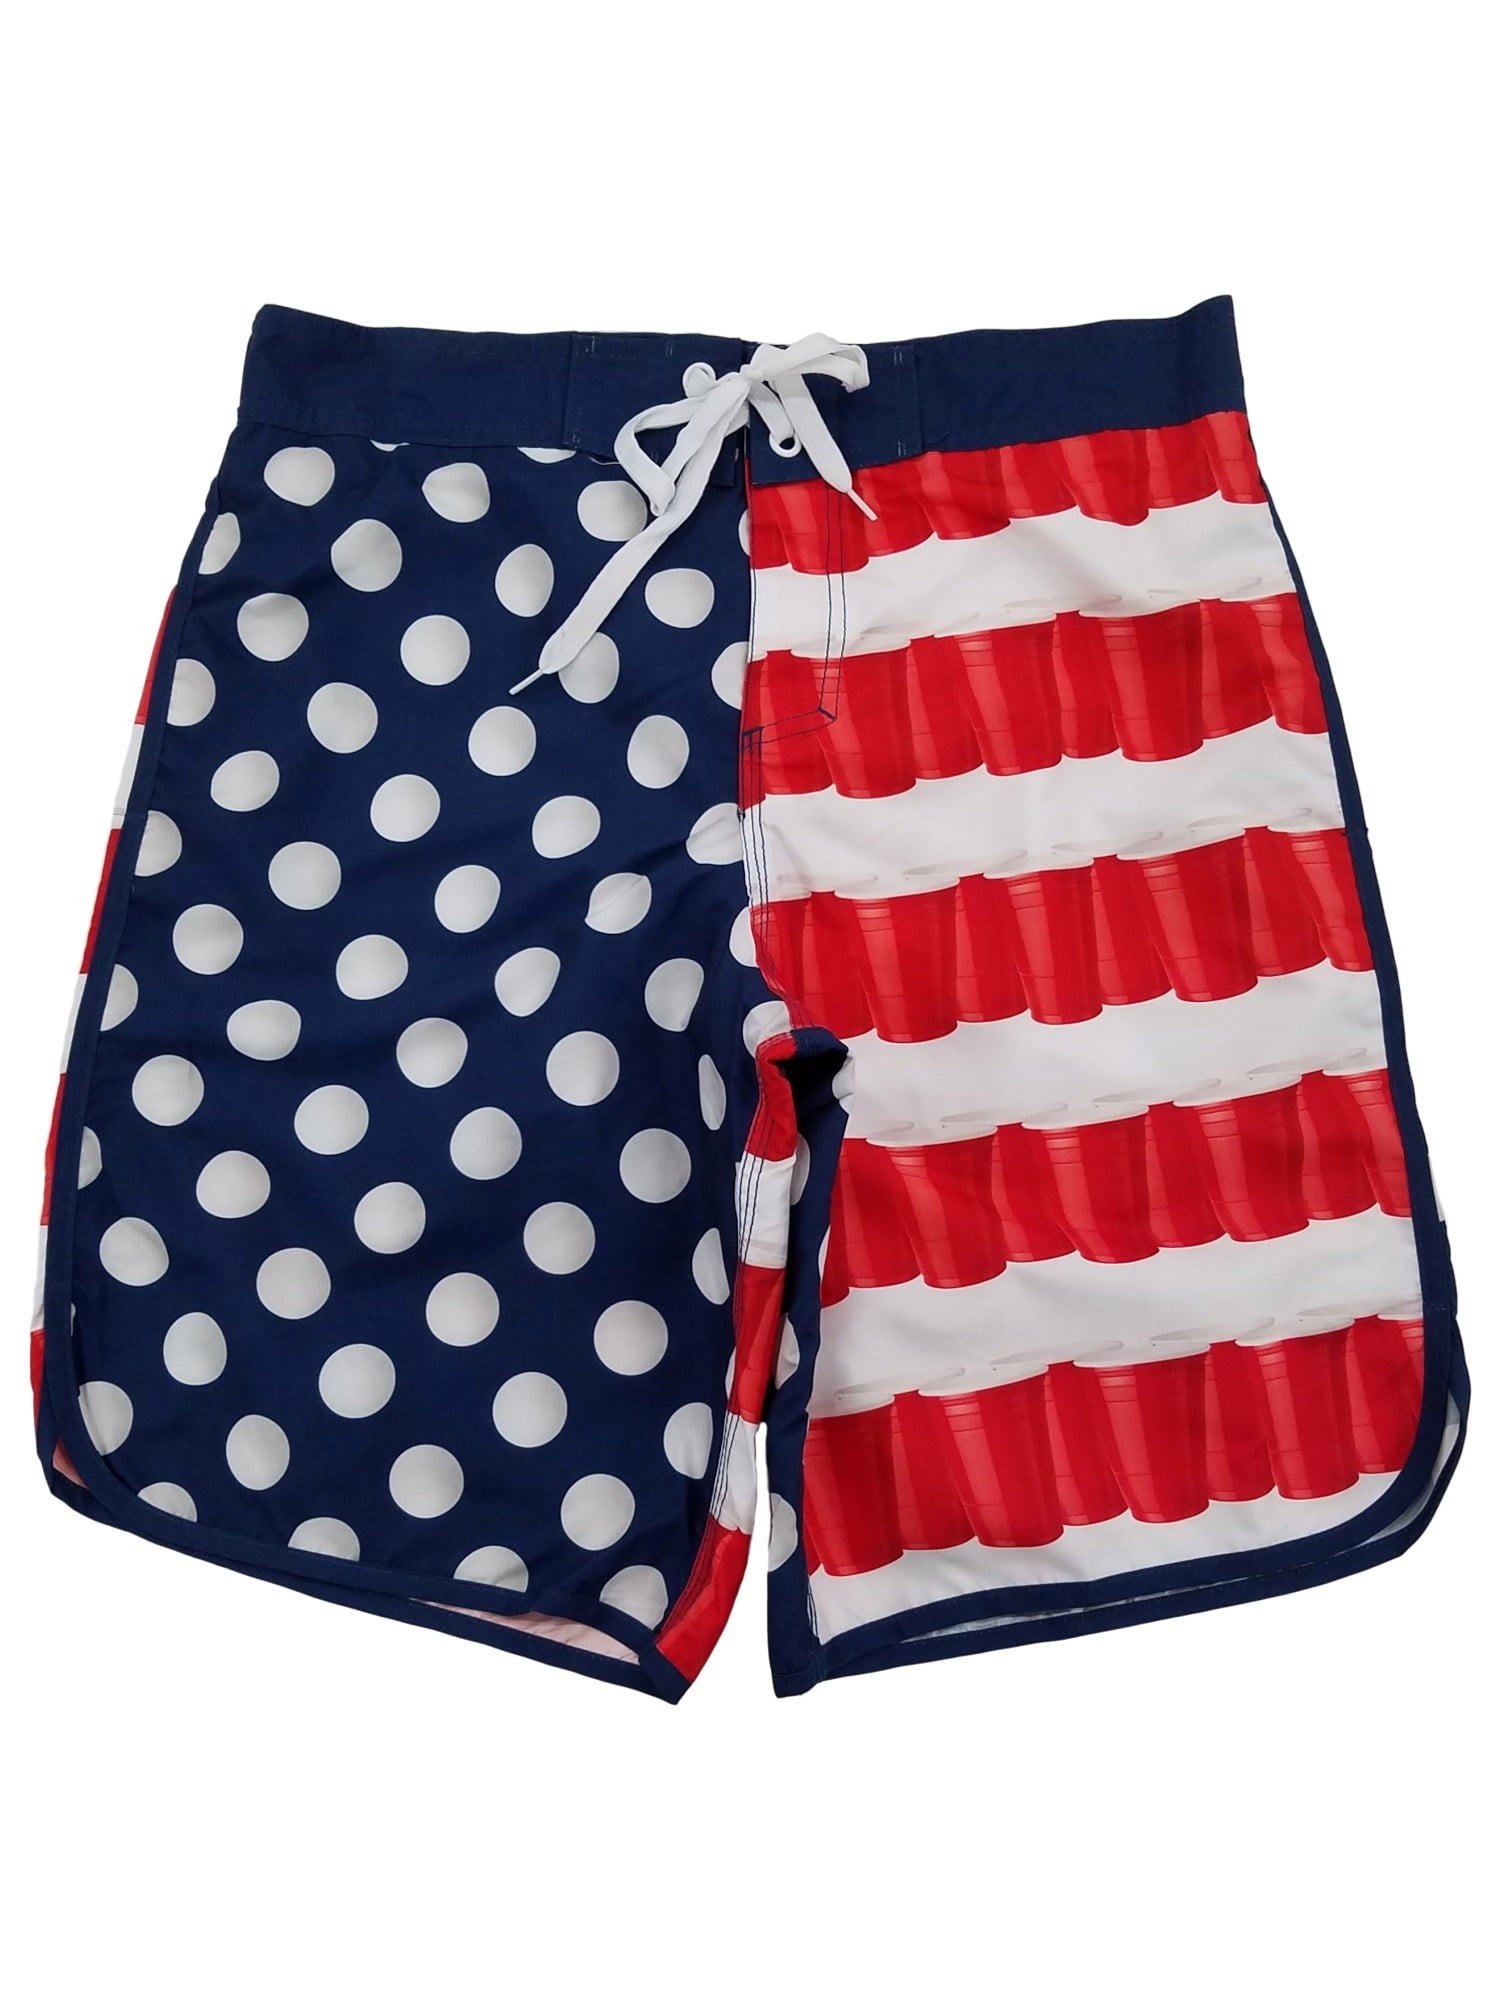 STDKNSK9 Mens Half USA Half Chicago Flag Boardshorts Beach Shorts